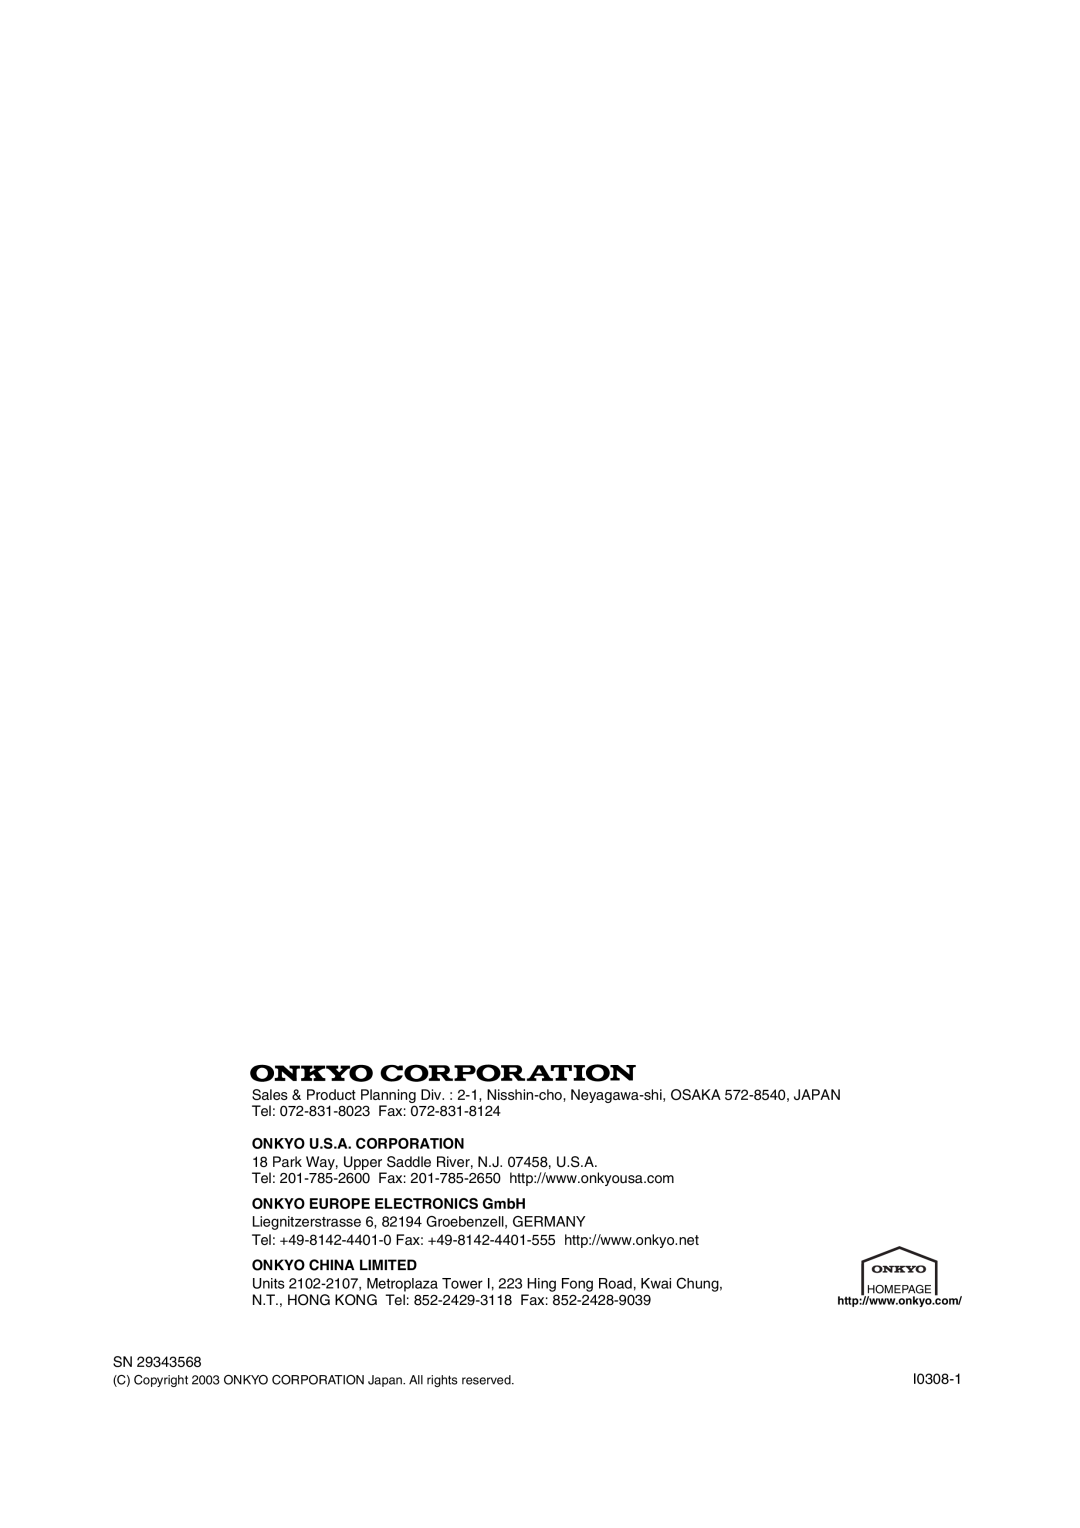 Onkyo DX-C390 instruction manual Onkyo U.S.A. Corporation, ONKYO EUROPE ELECTRONICS GmbH, Onkyo China Limited 